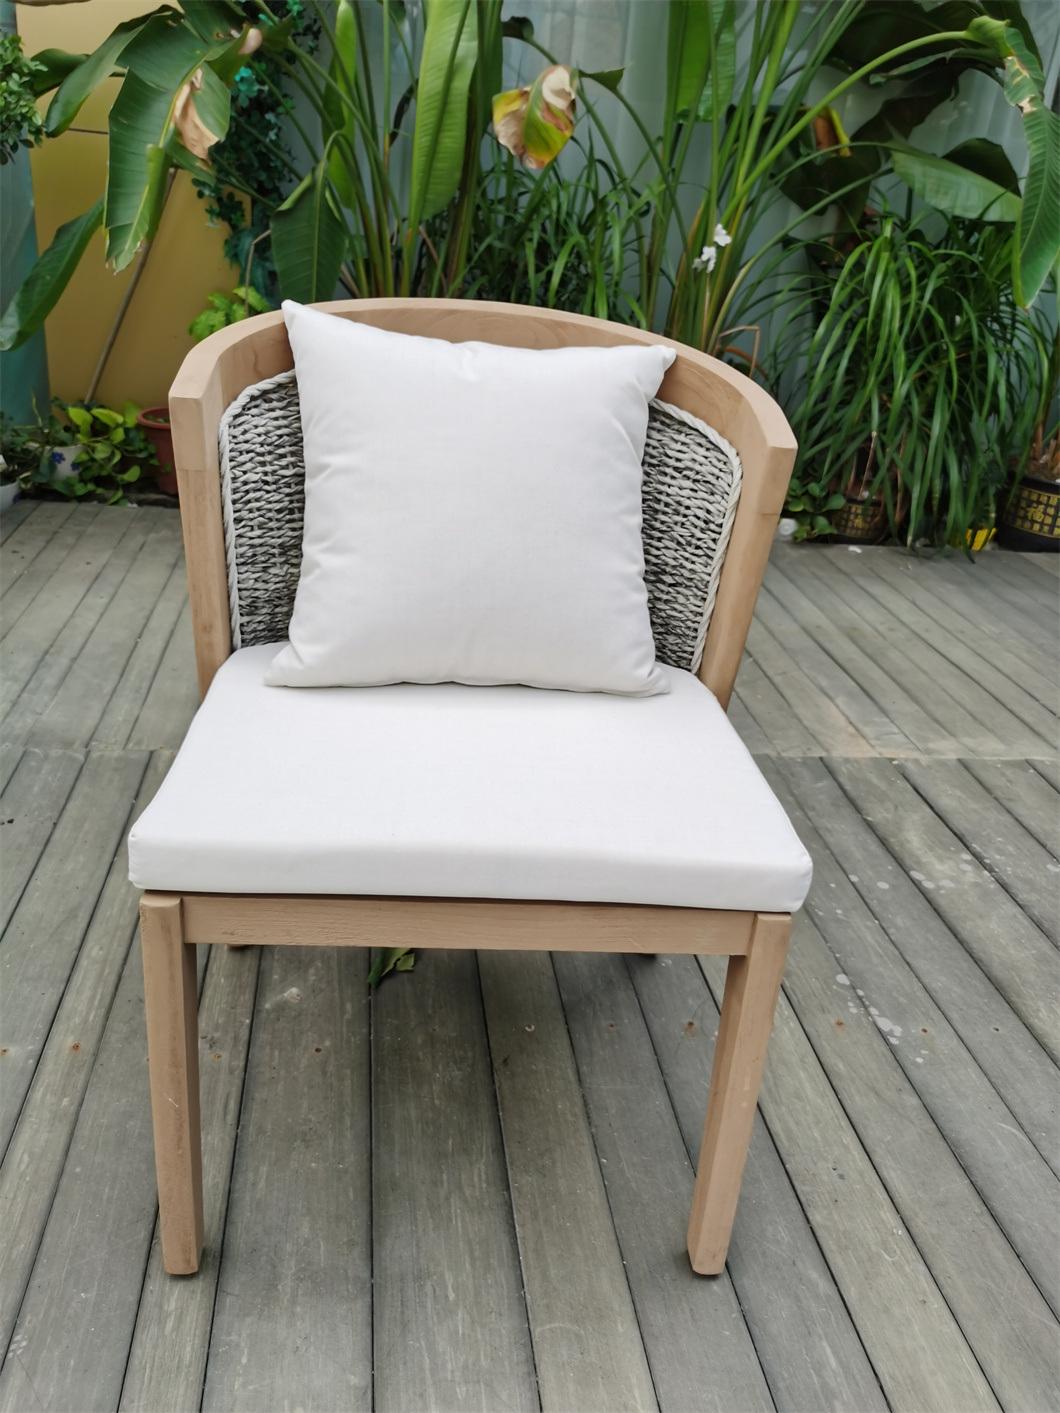 Factory Outdoor Modern Style Wooden White Garden Patio Rattan Furniture Chair